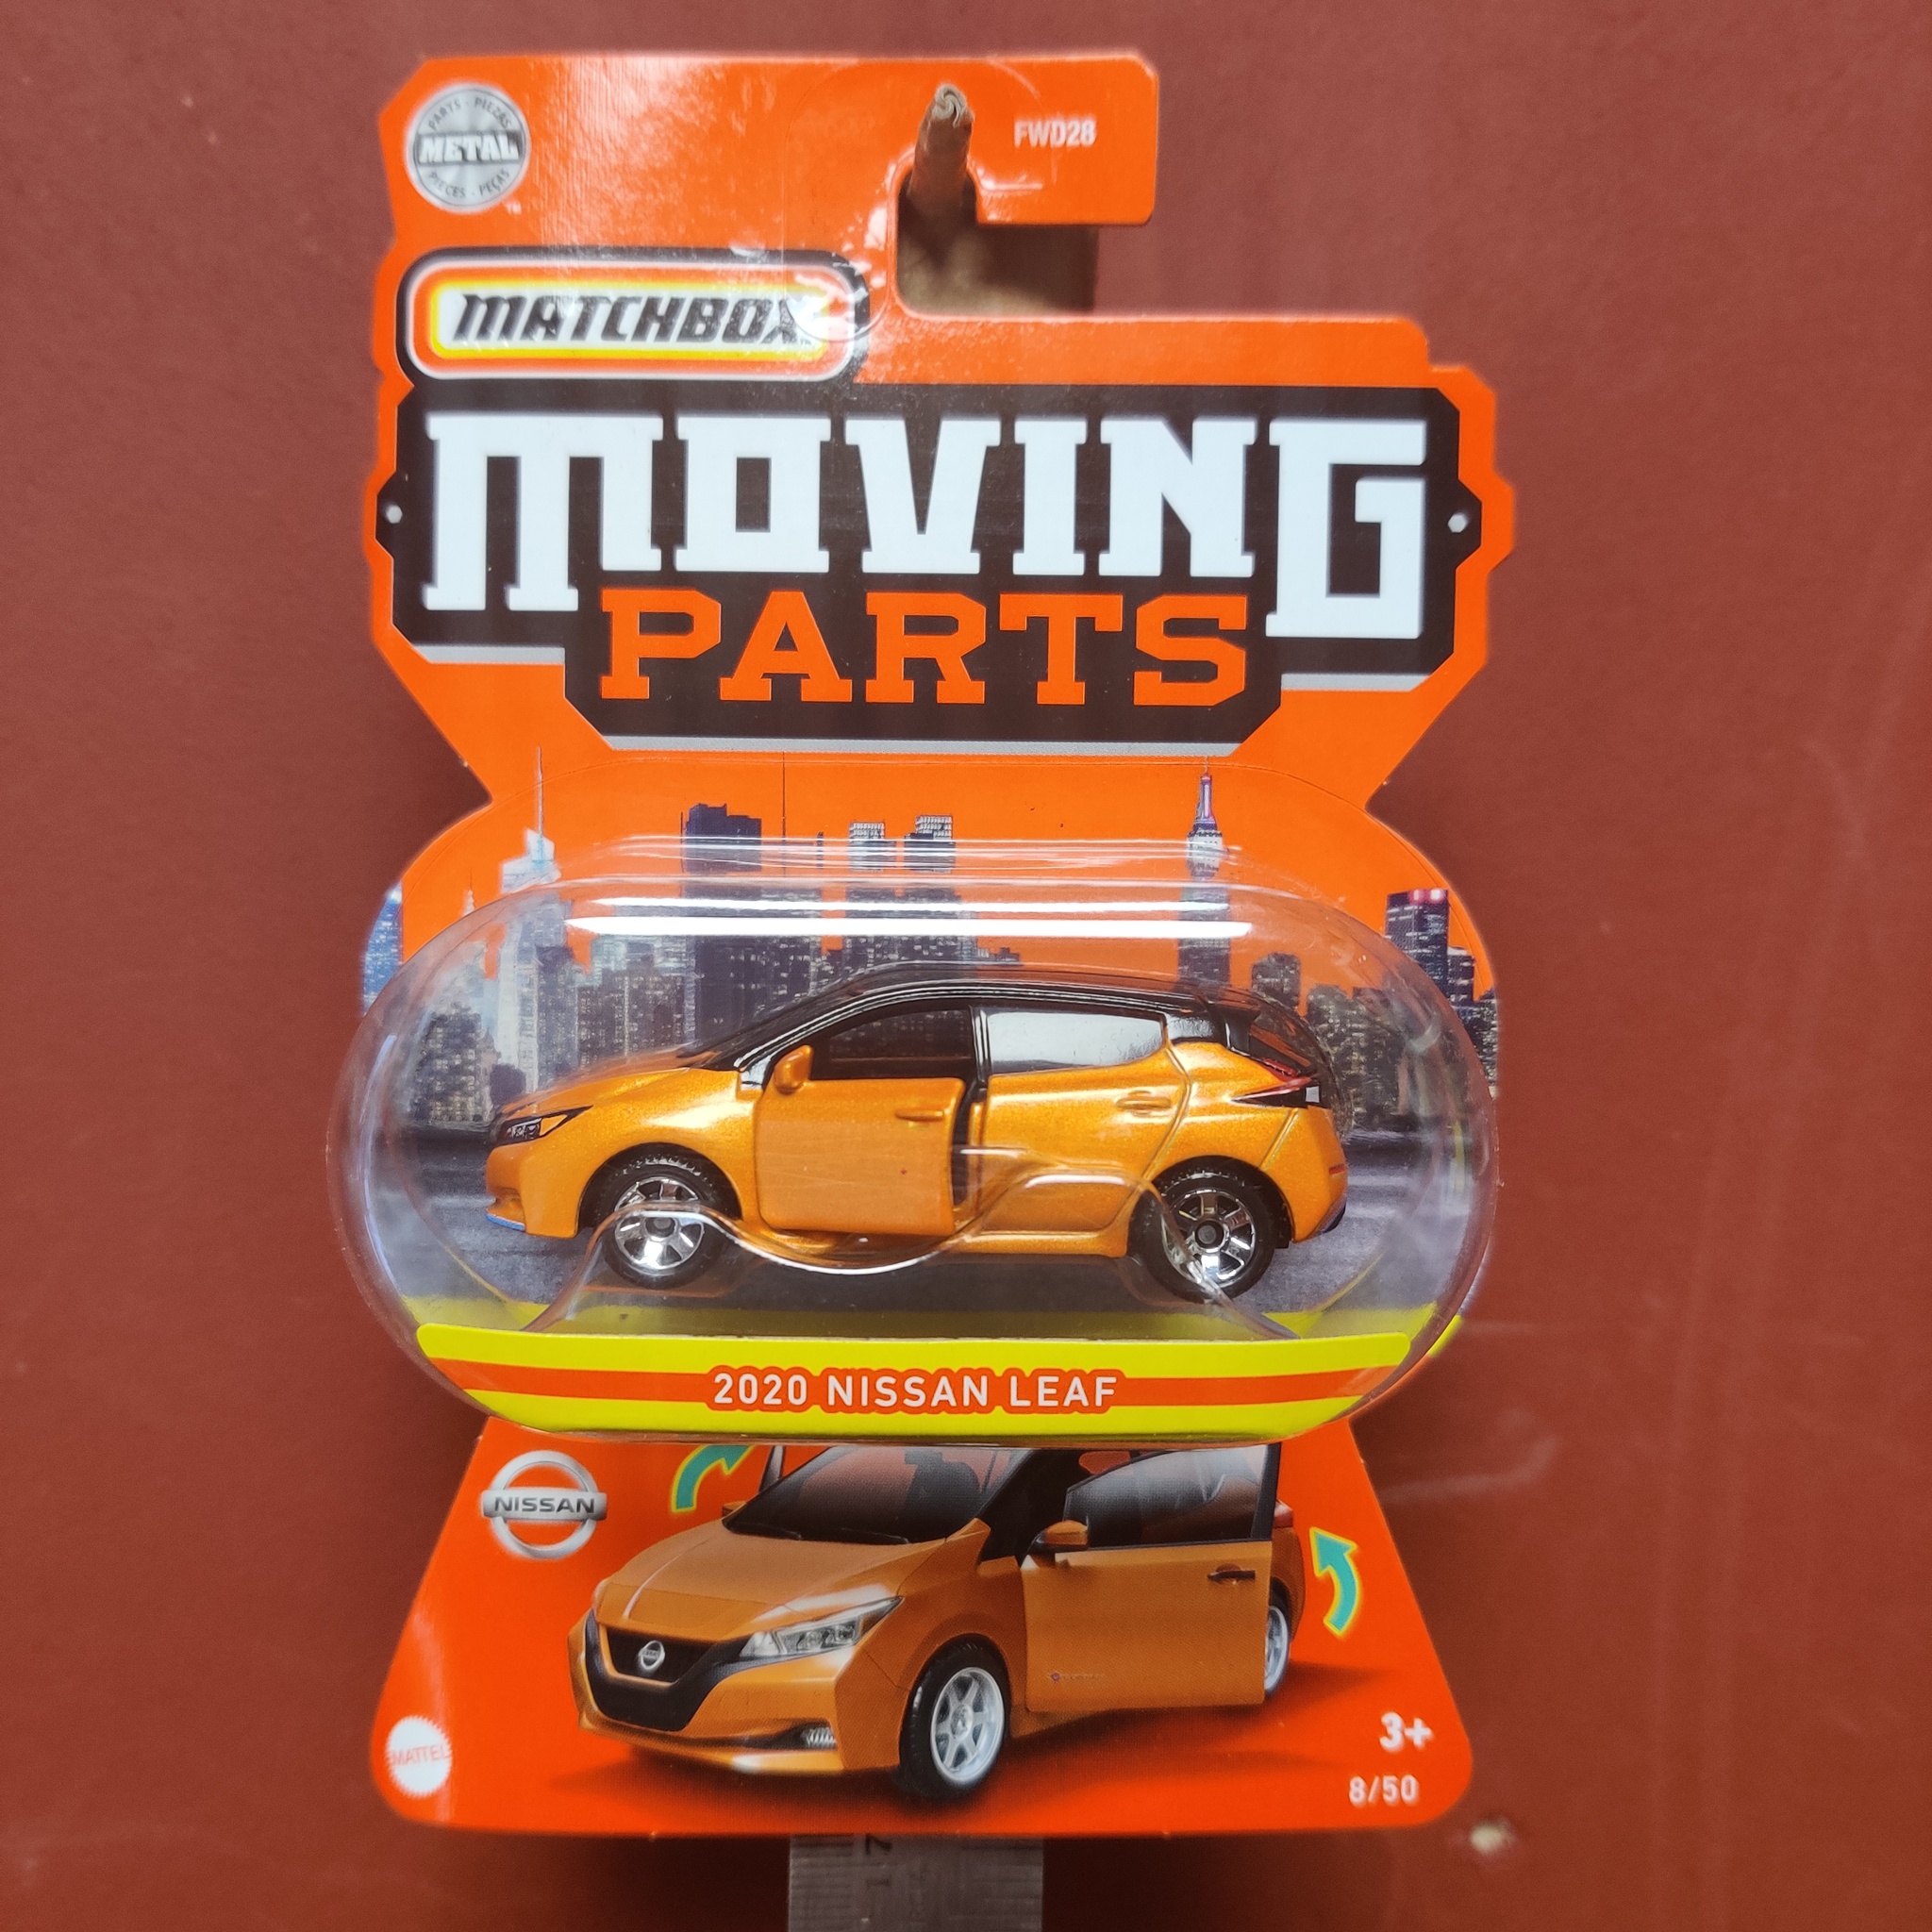 Scale 1/64 Matchbox "Moving Parts" - Nissan Leaf 2020